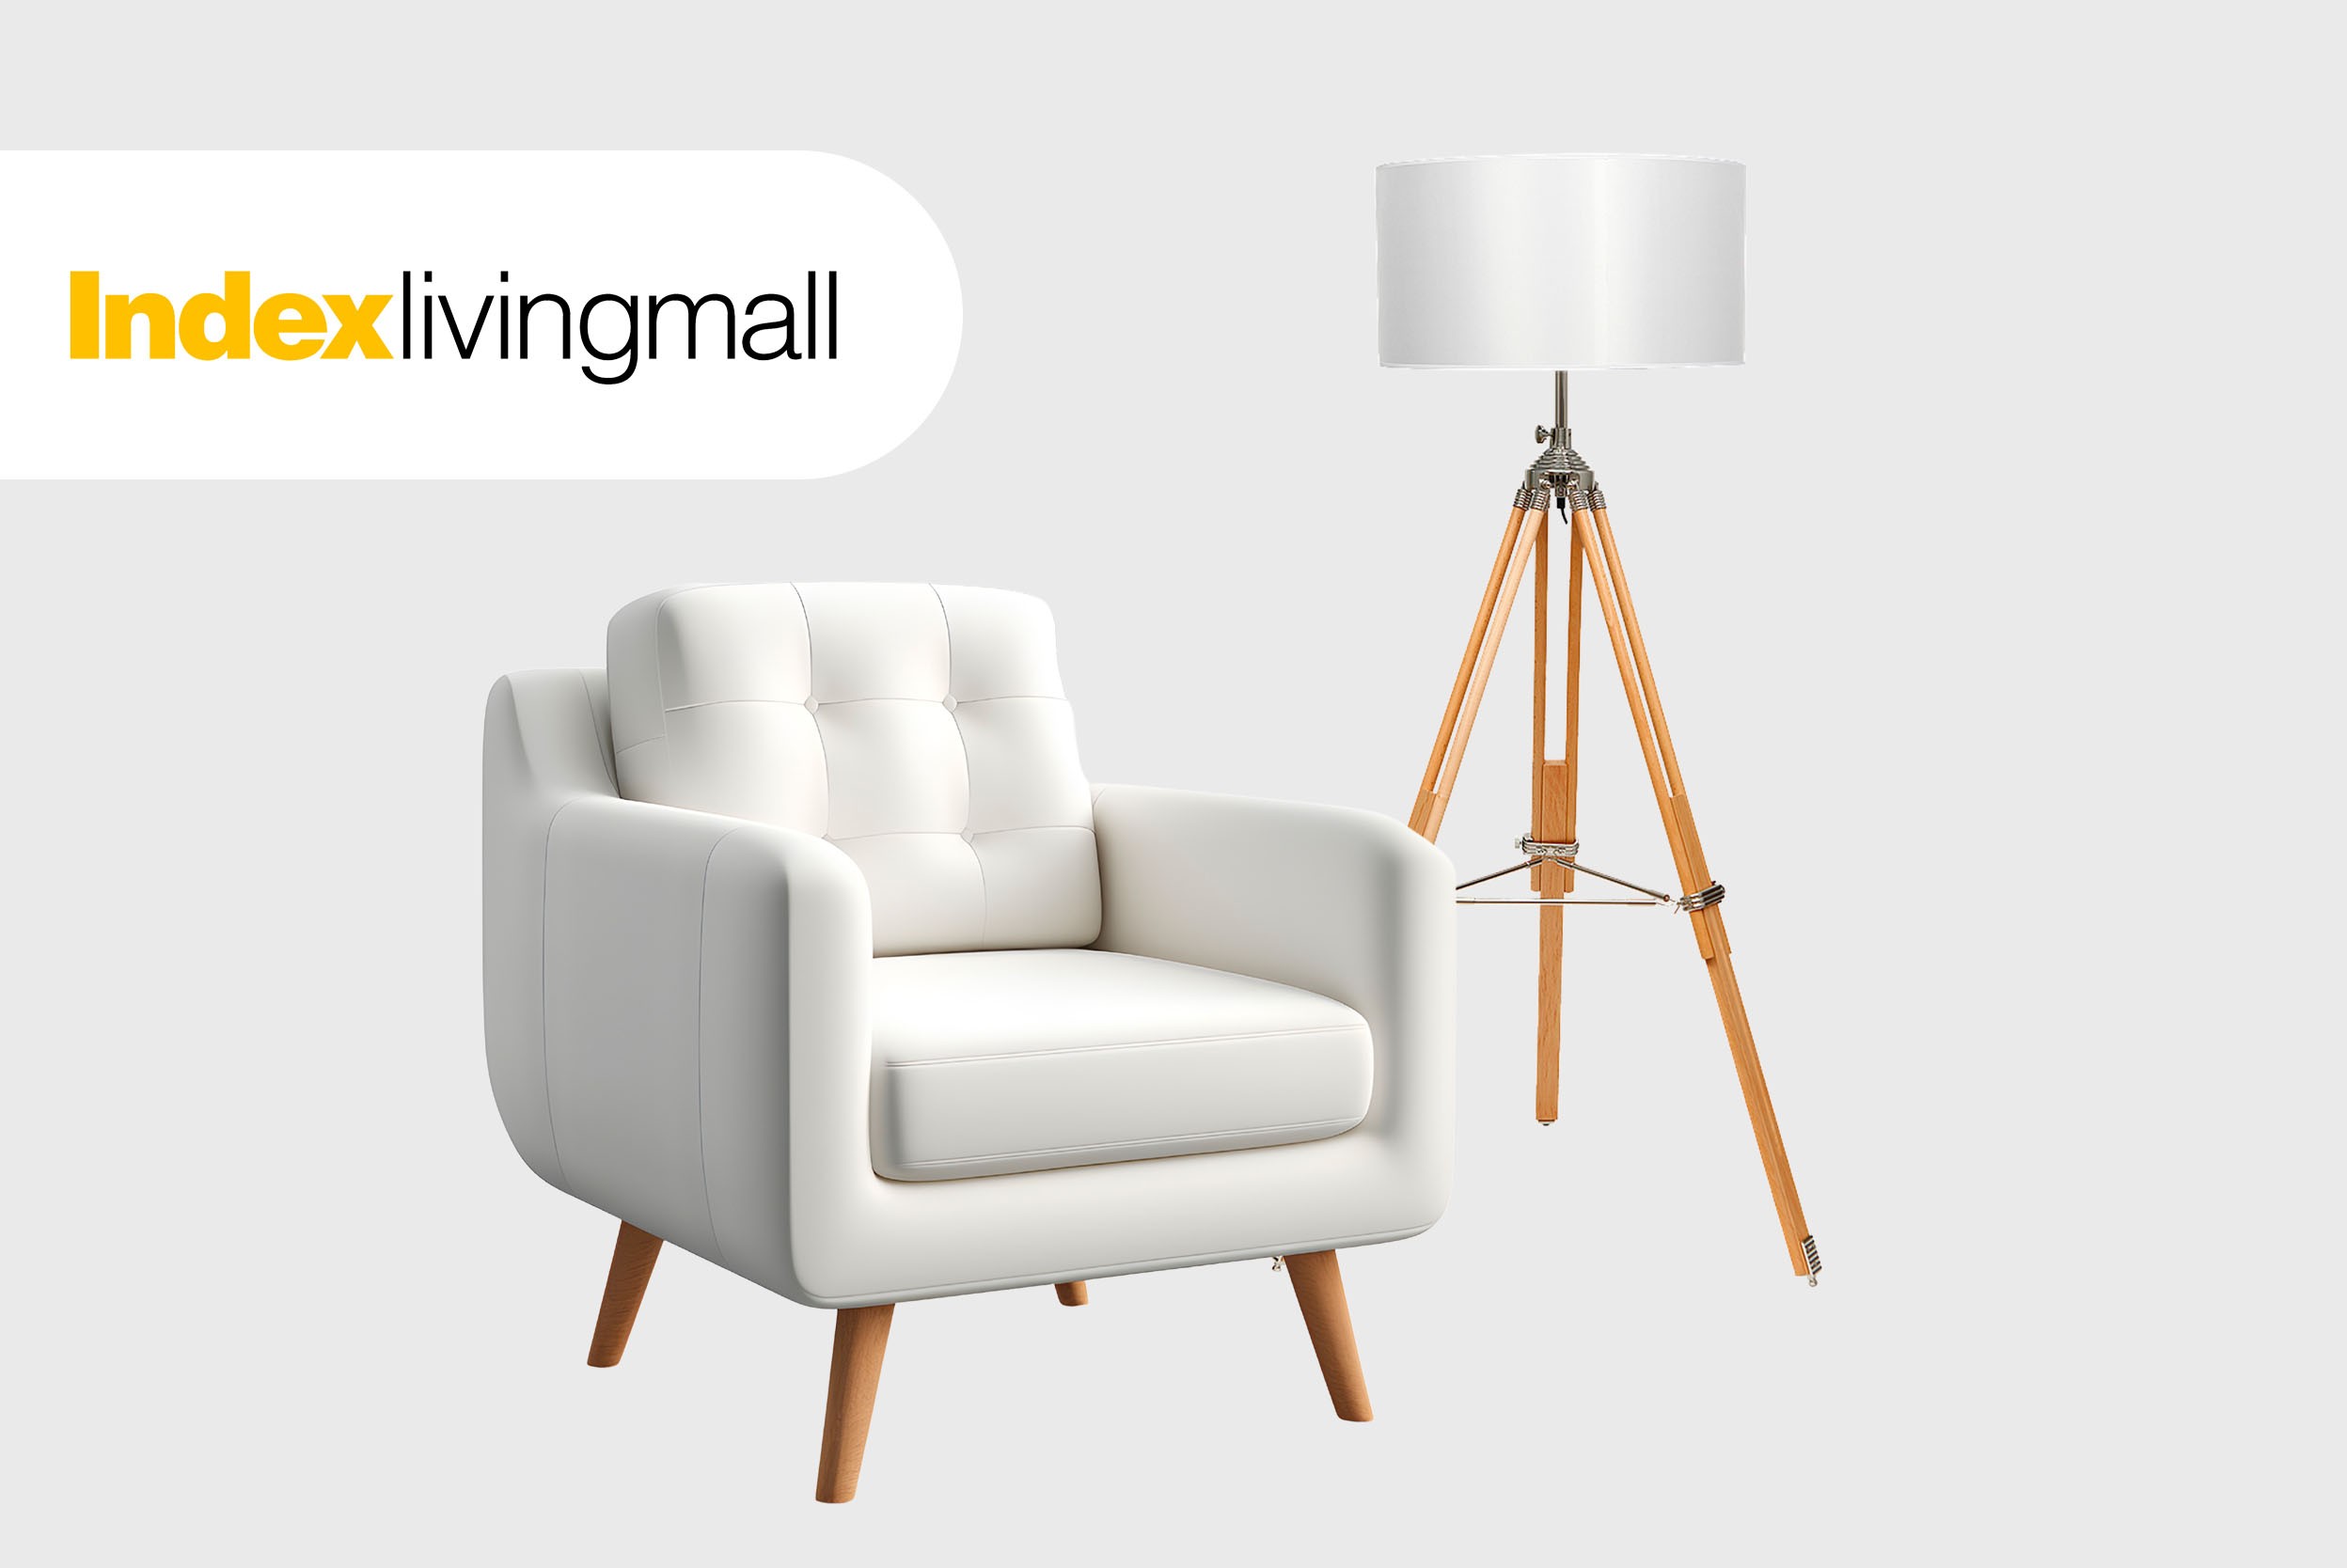 Index-livingmall-logo